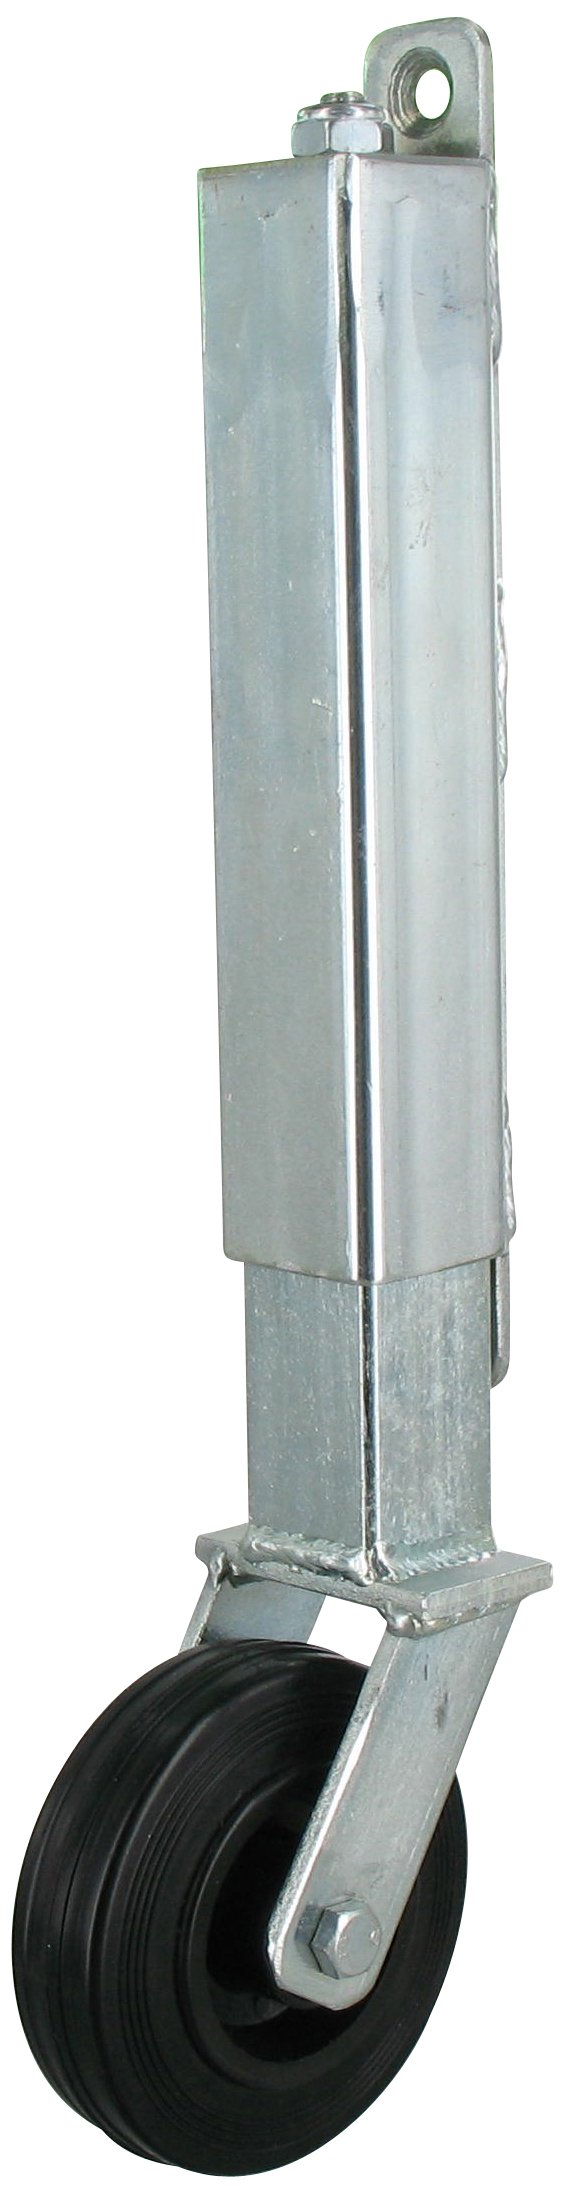 Torrolle GRK NBF Serie, Ø100x30mm, Stahl, geschweißt, schwarz, 70 KG Tragfähigkeit, 401010